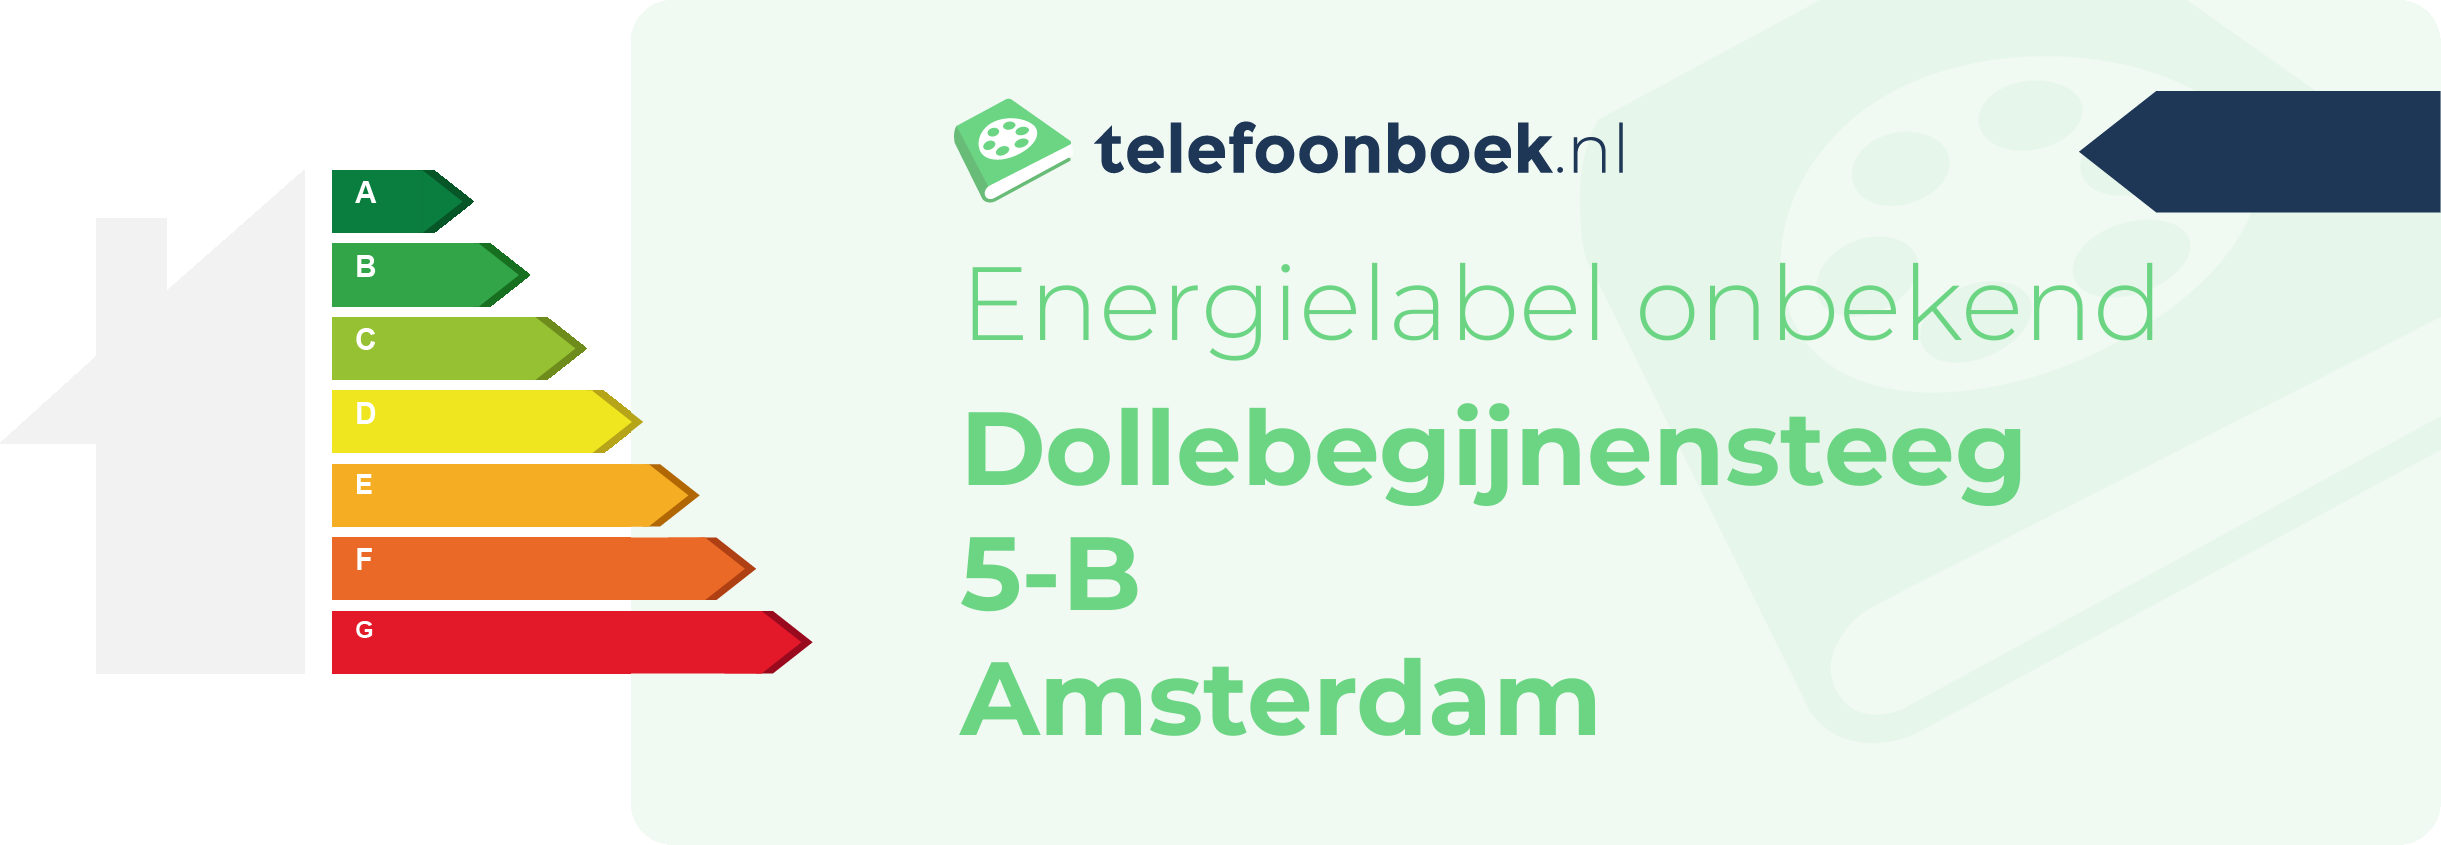 Energielabel Dollebegijnensteeg 5-B Amsterdam